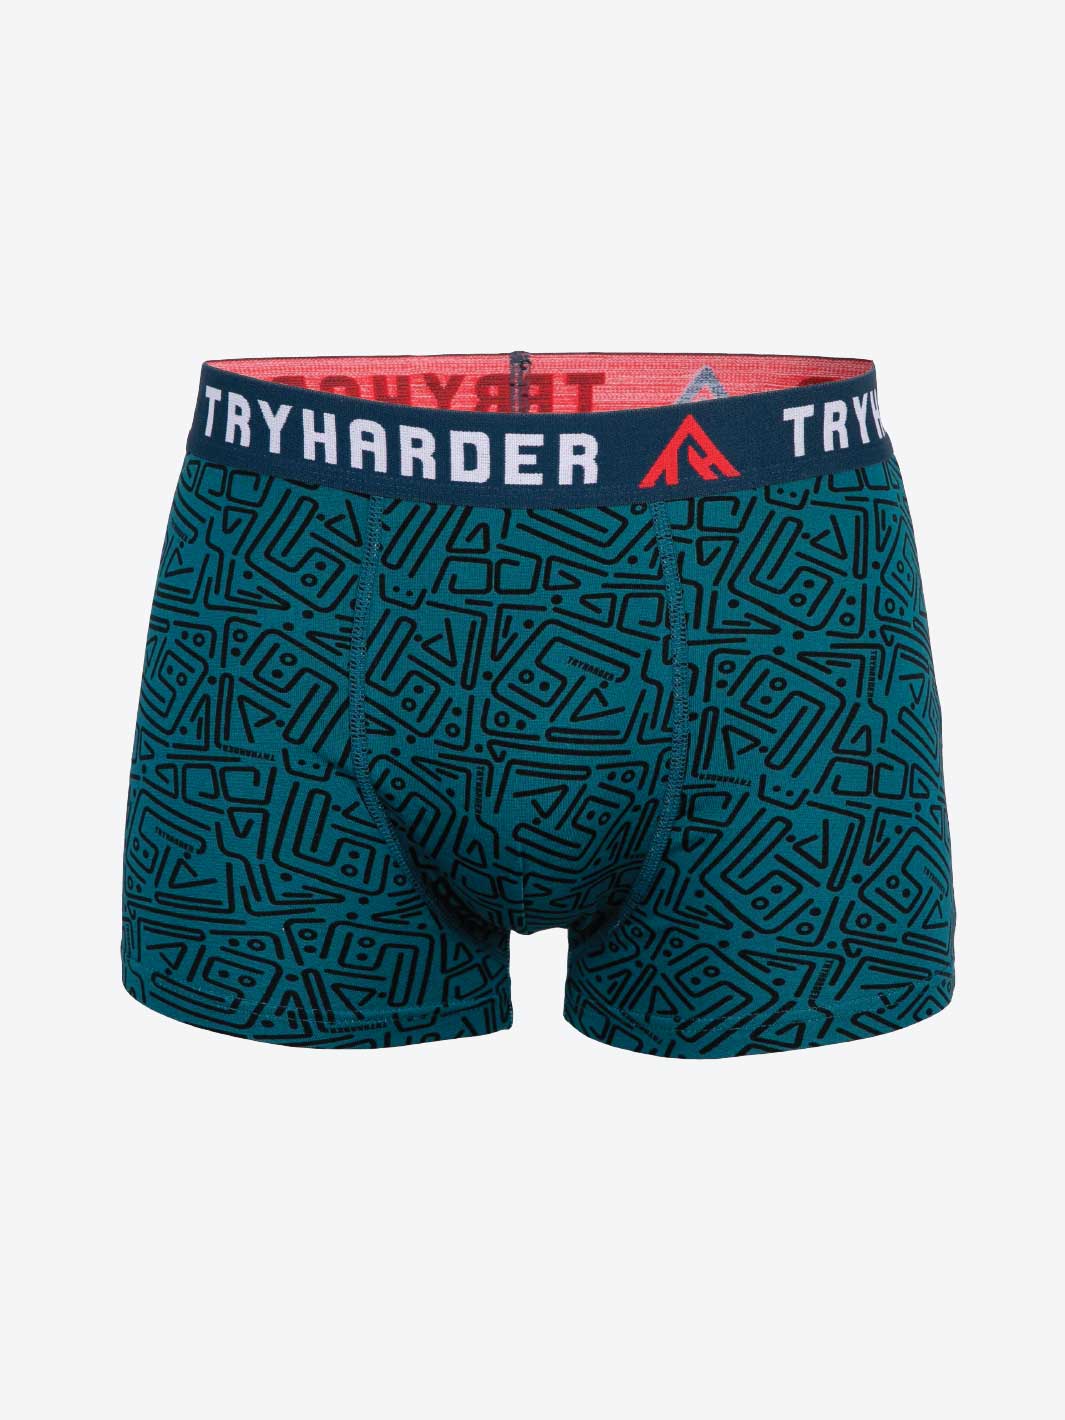 TRYHARDER - Boxer - Labyrinth blau 1 Pack